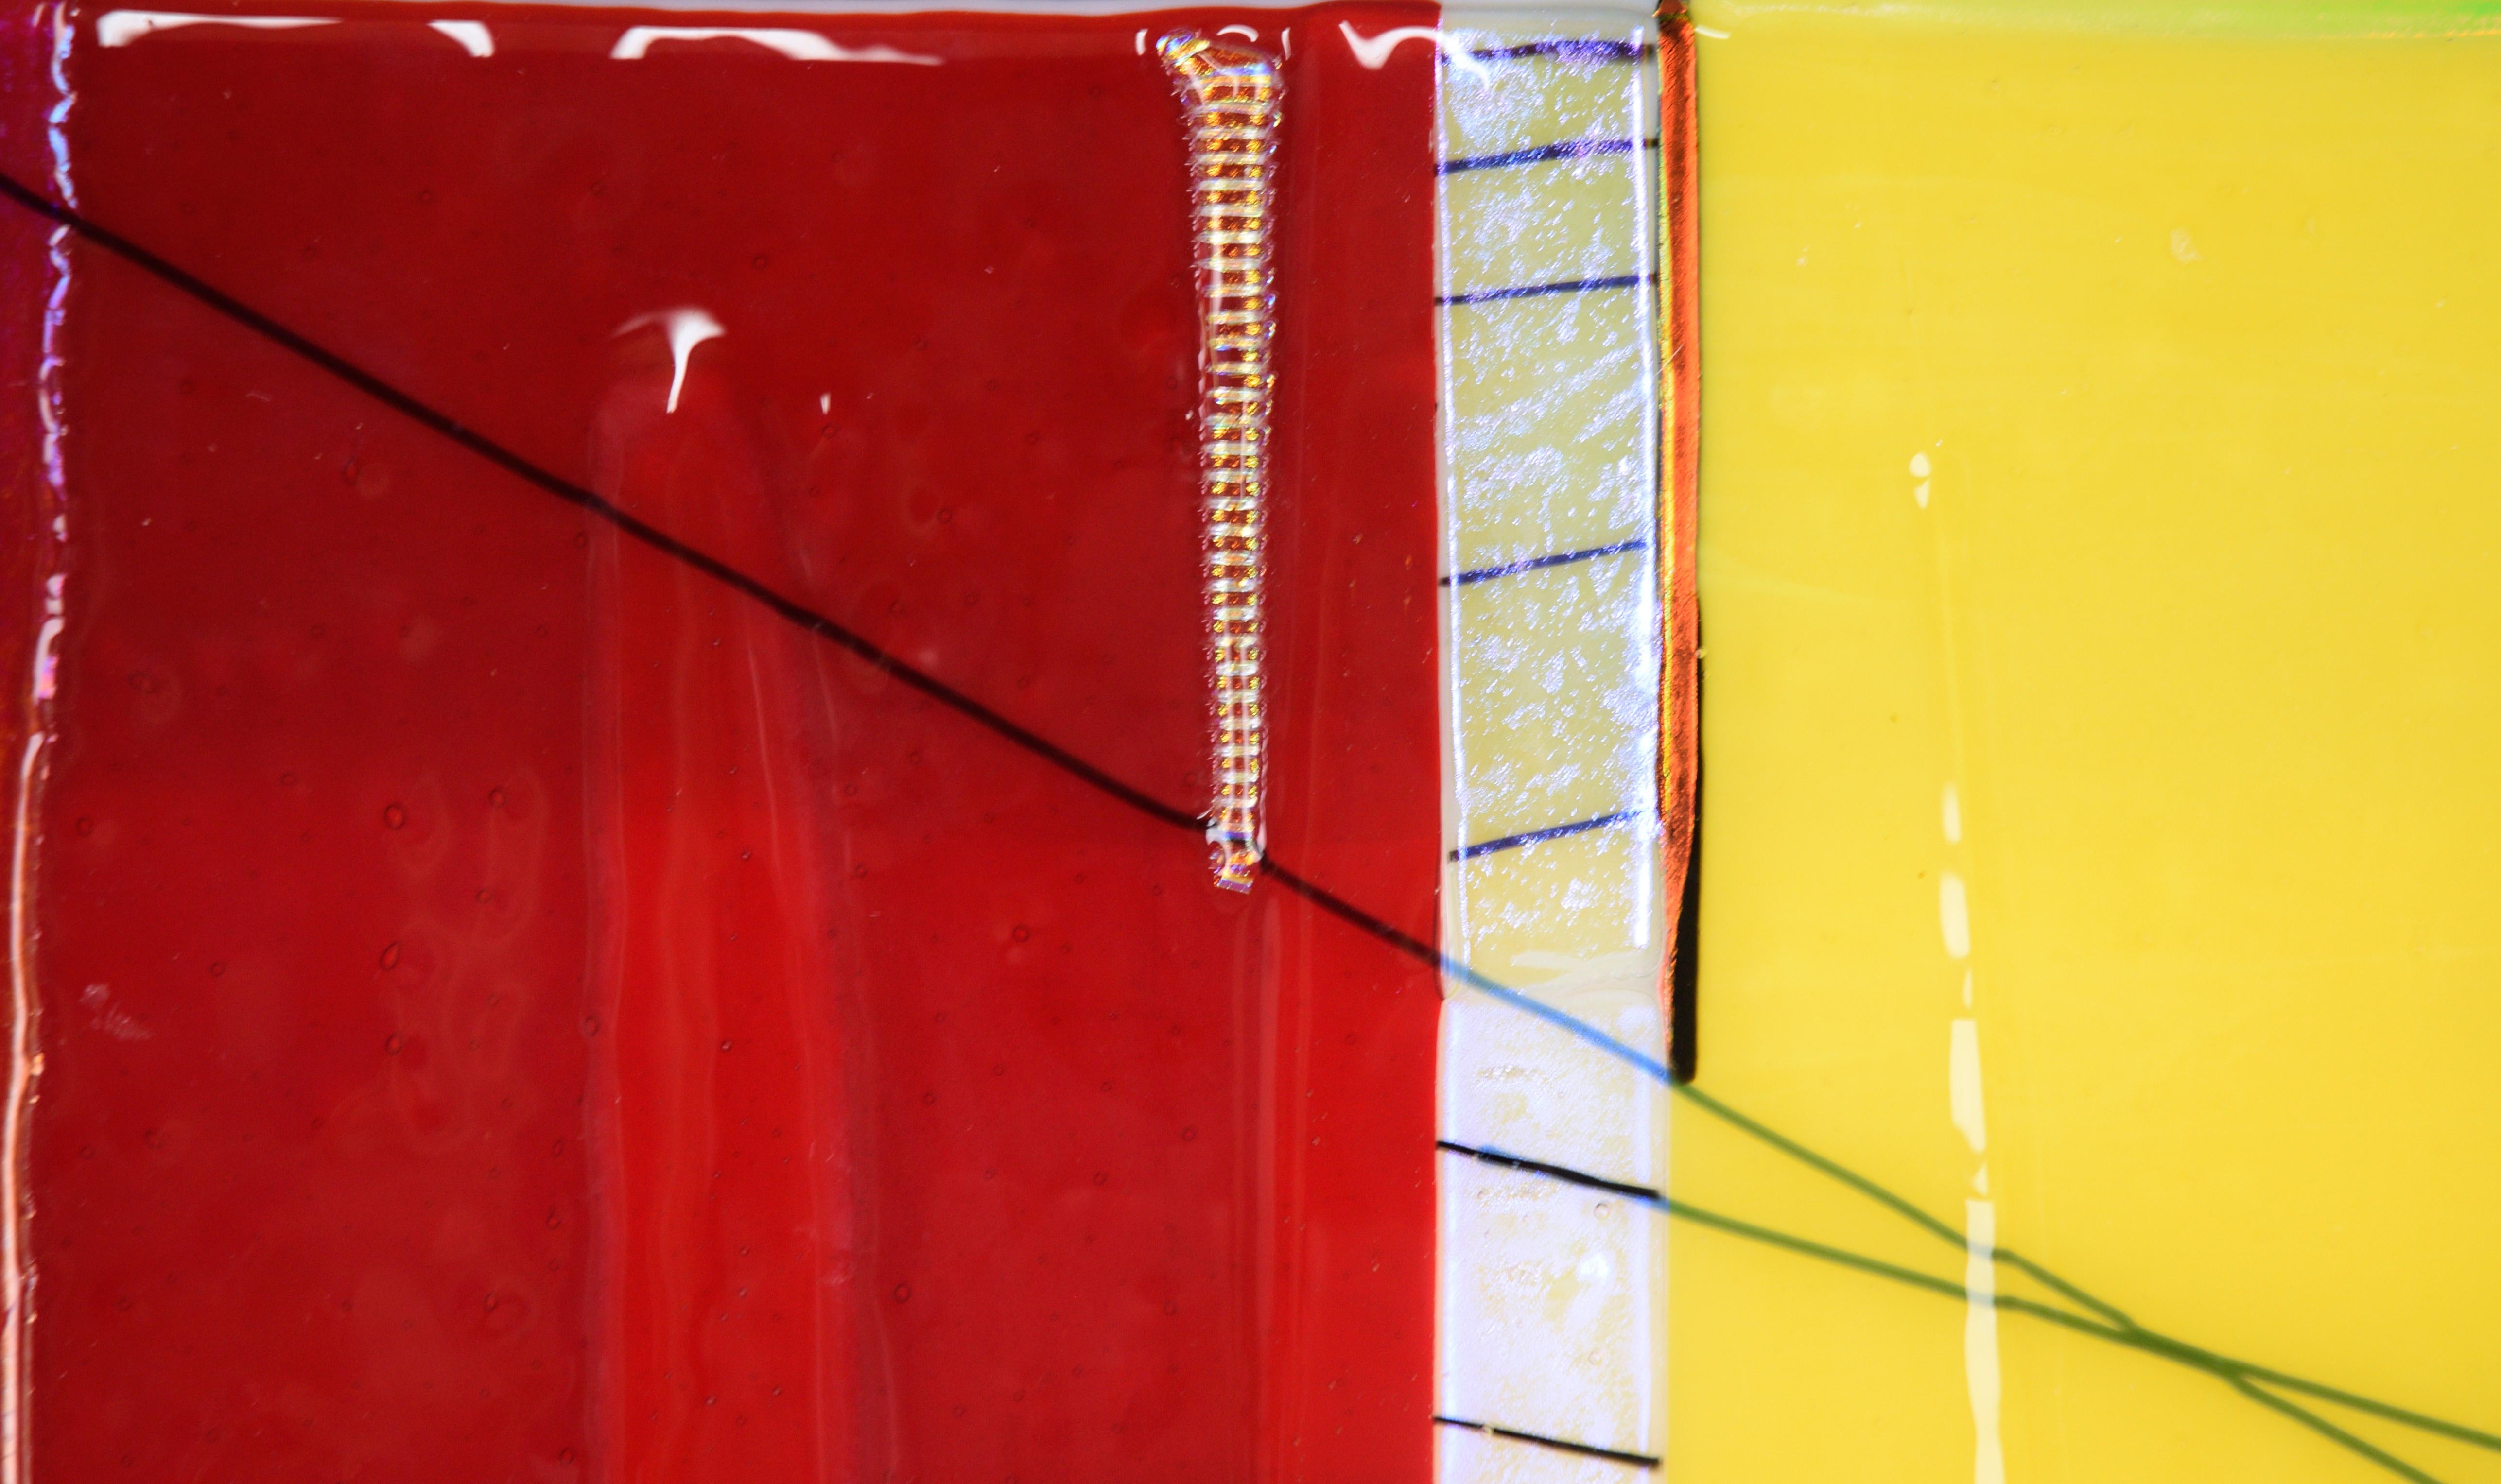 Minimalist Dichroic Glass Sculpture - Red Abstract Sculpture by Yolanda Adra